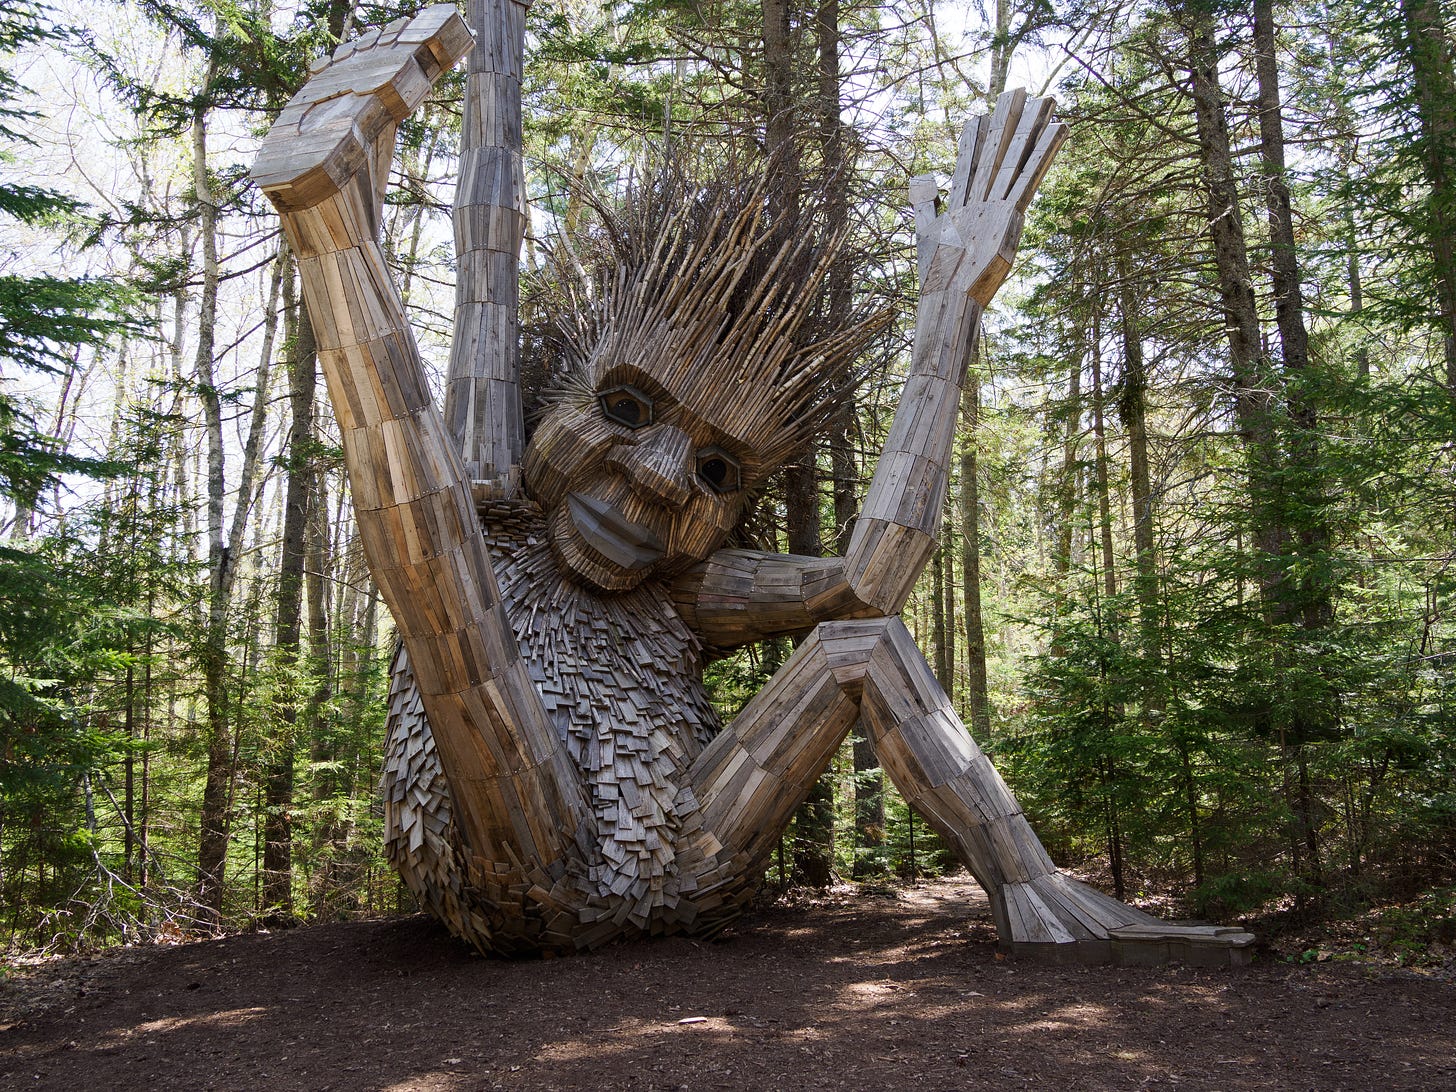 Giant troll sculptures